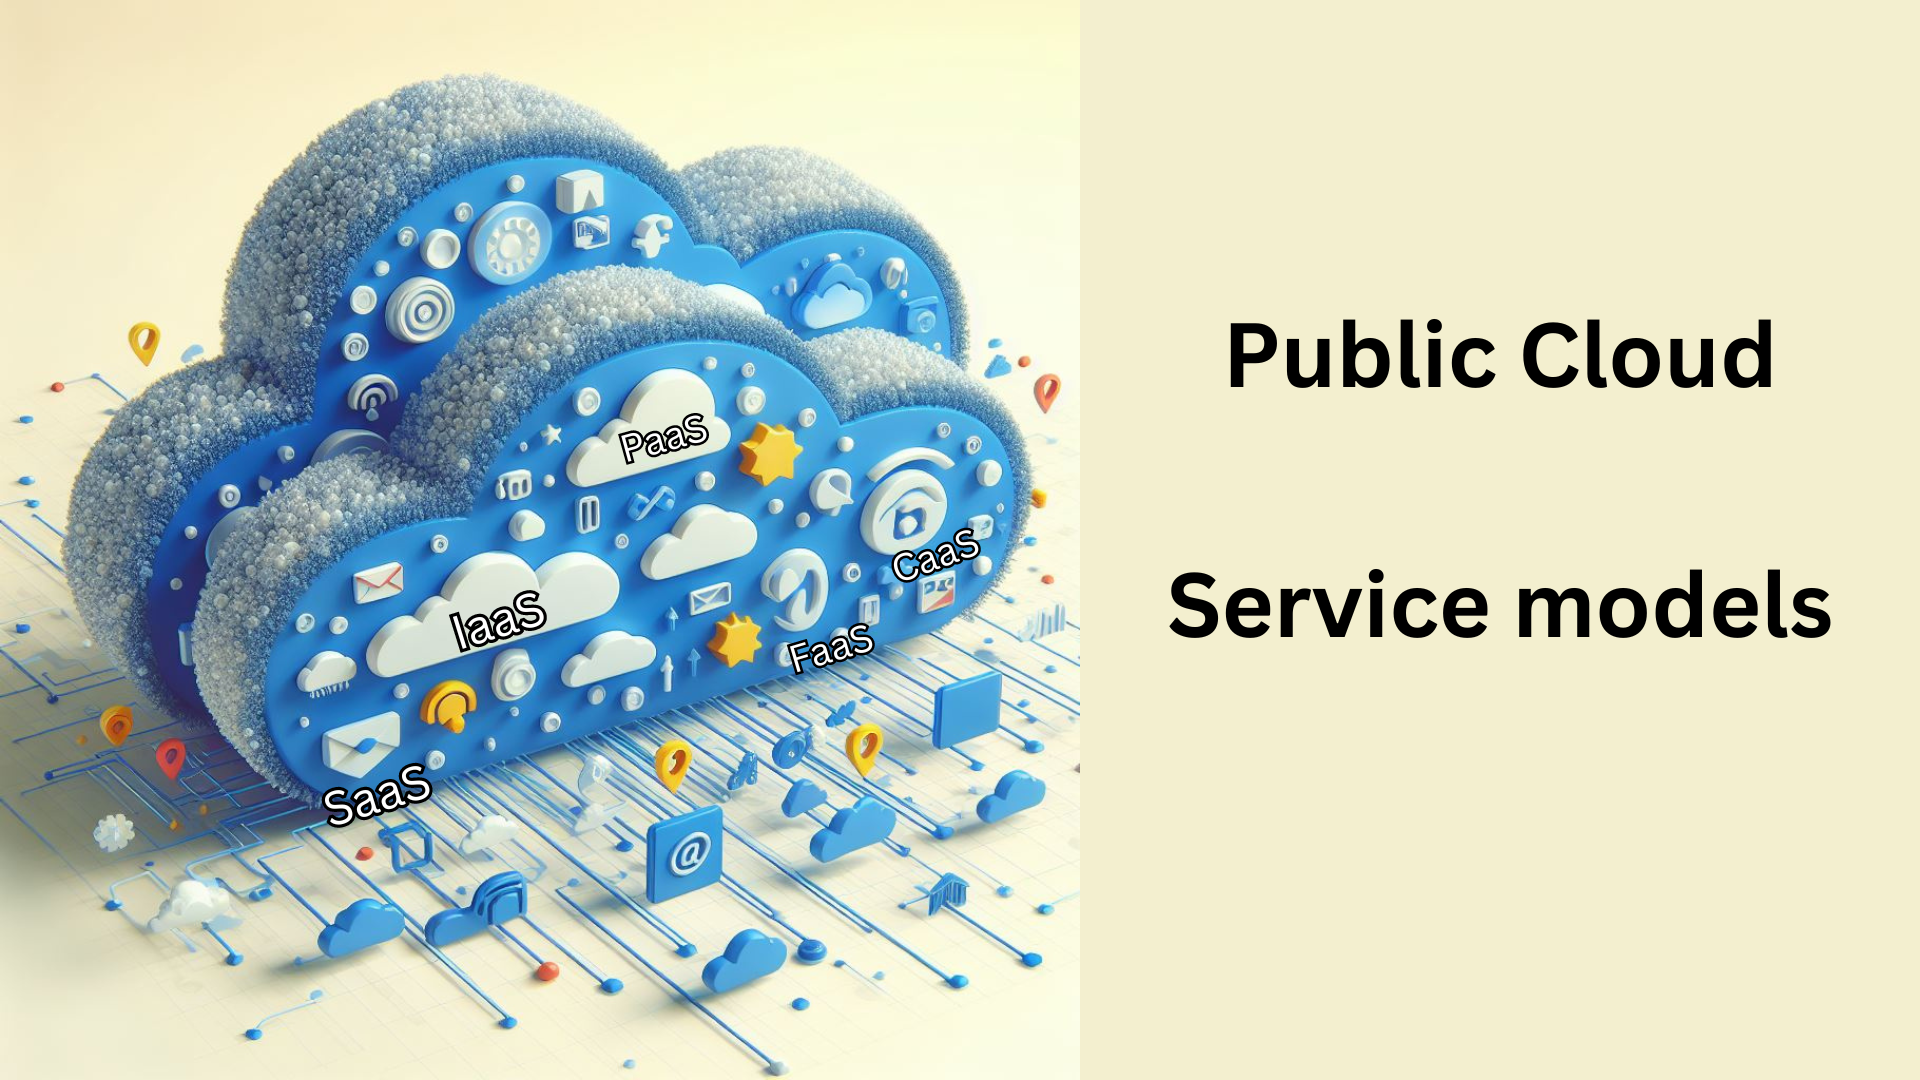 Public Cloud - Service models